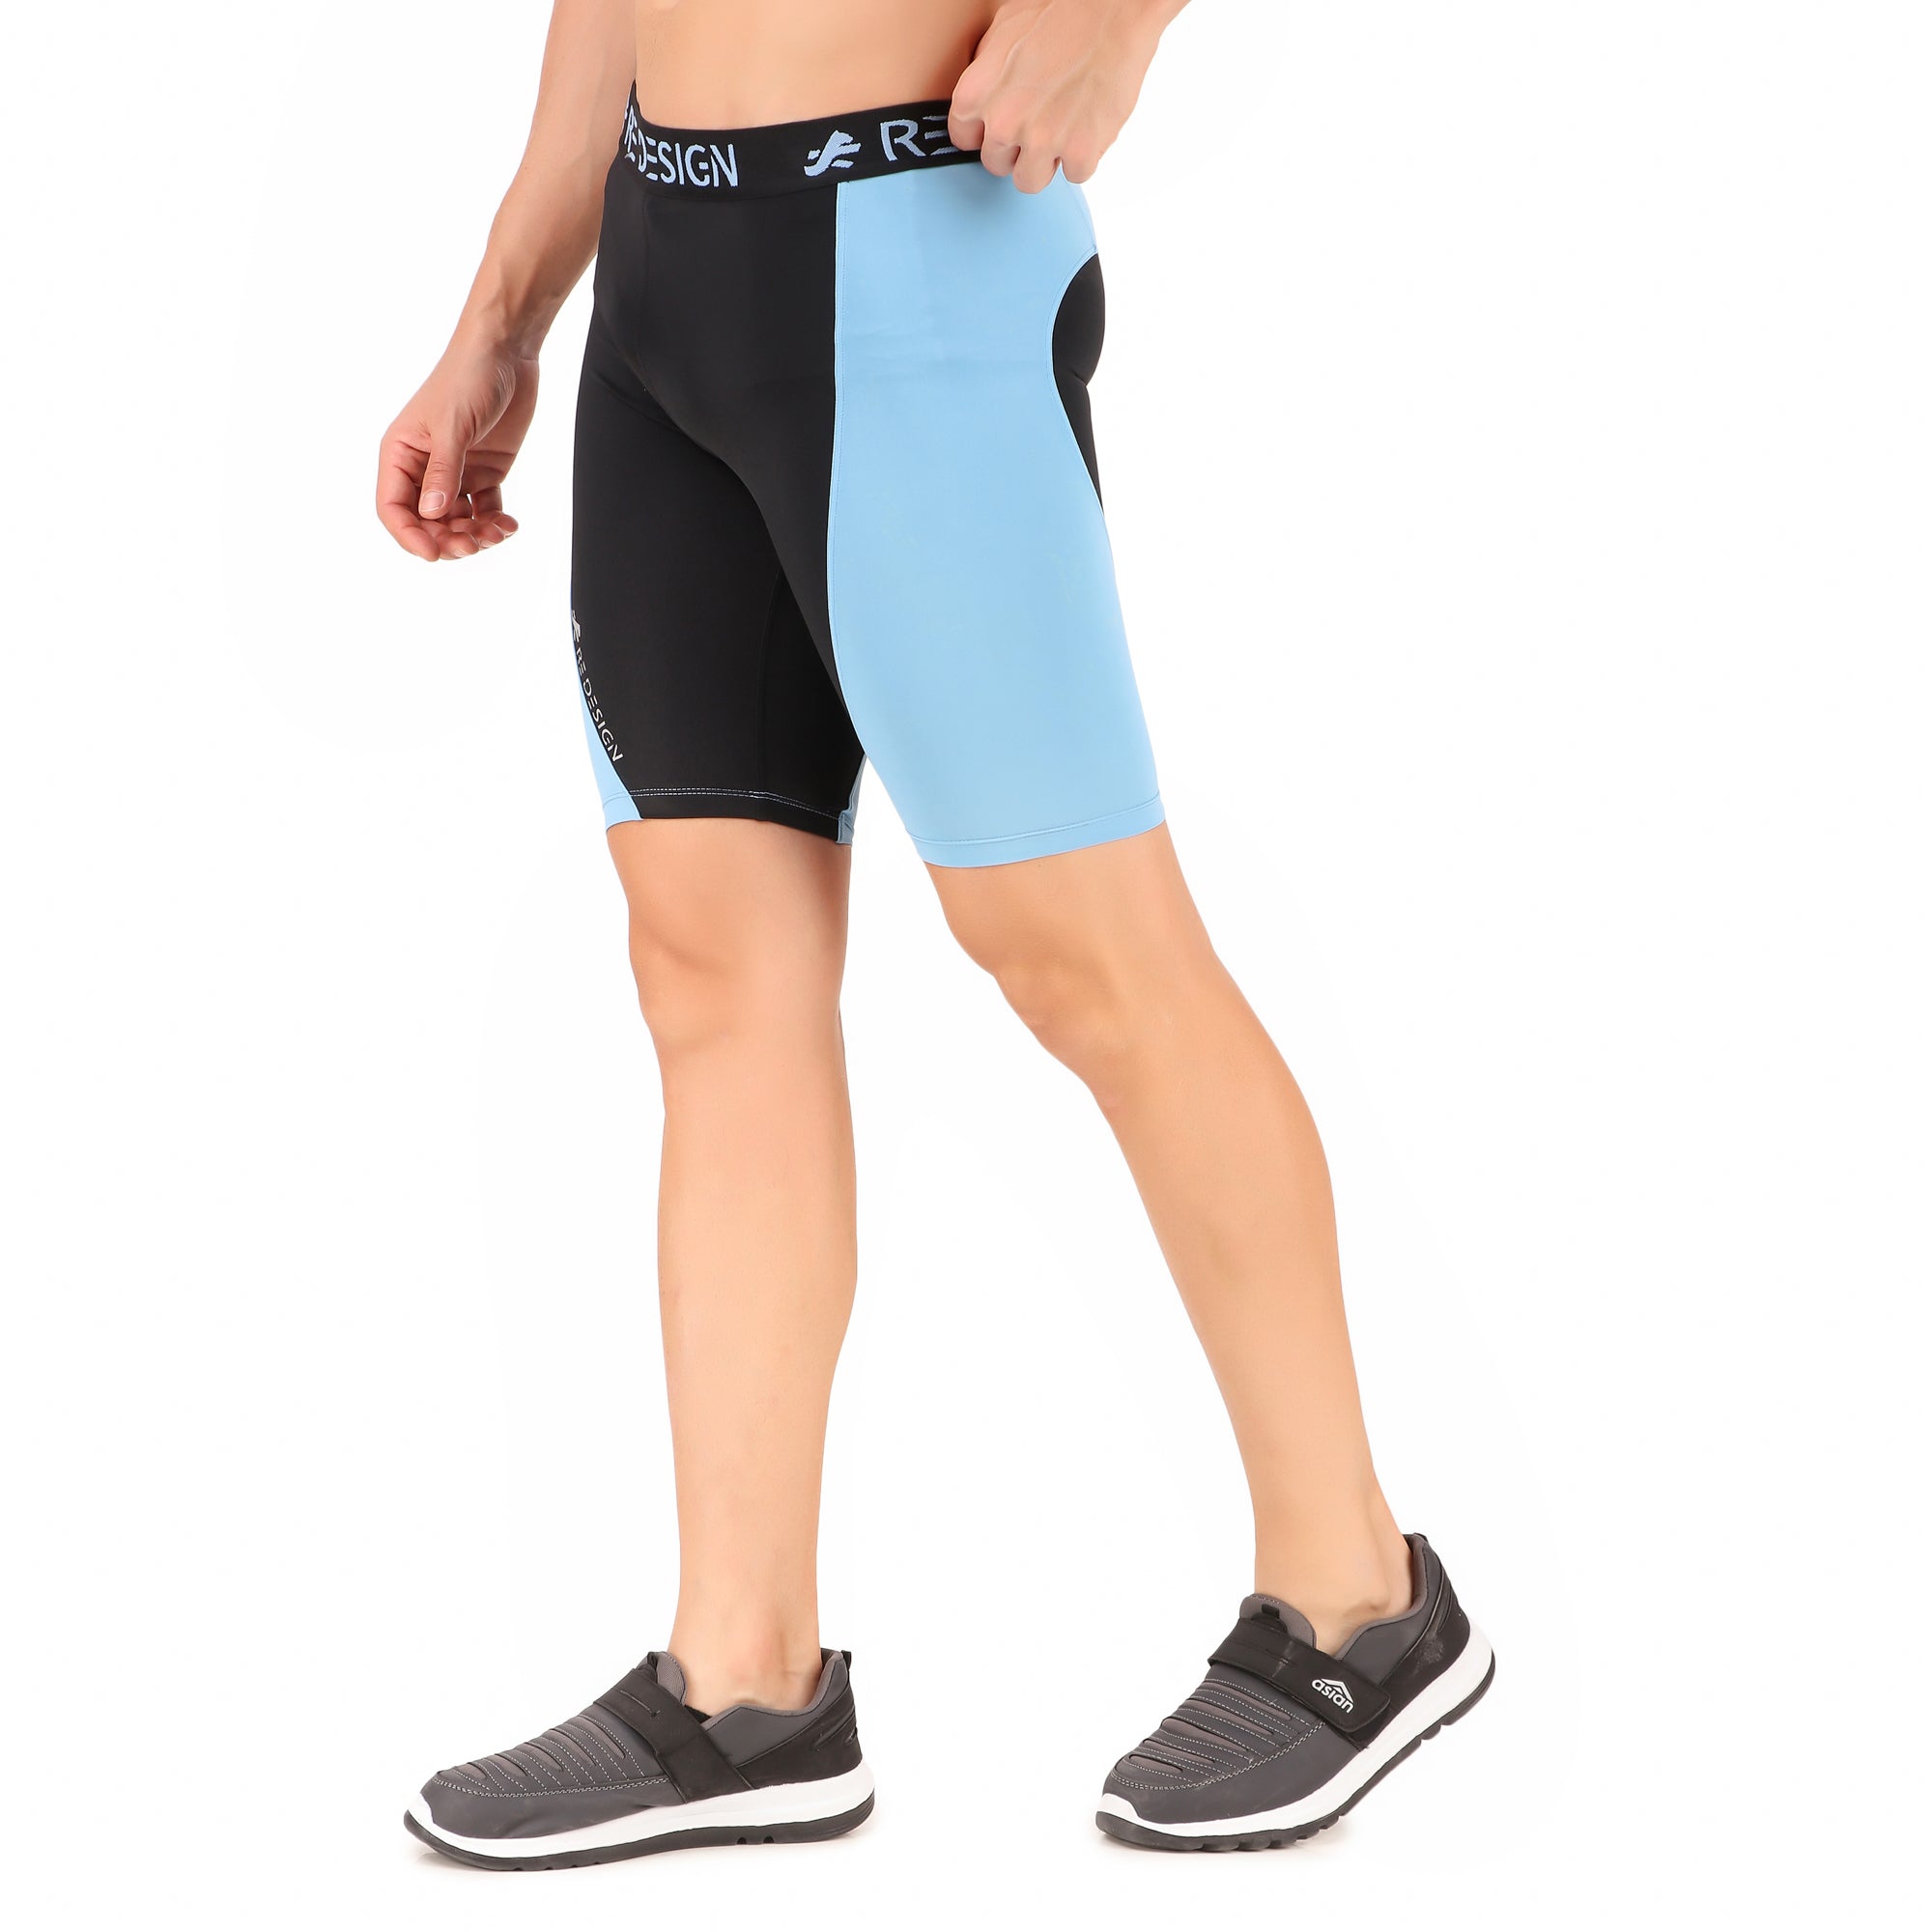 Nylon Compression Shorts and Half Tights For Men (BLACK/SKY BLUE)